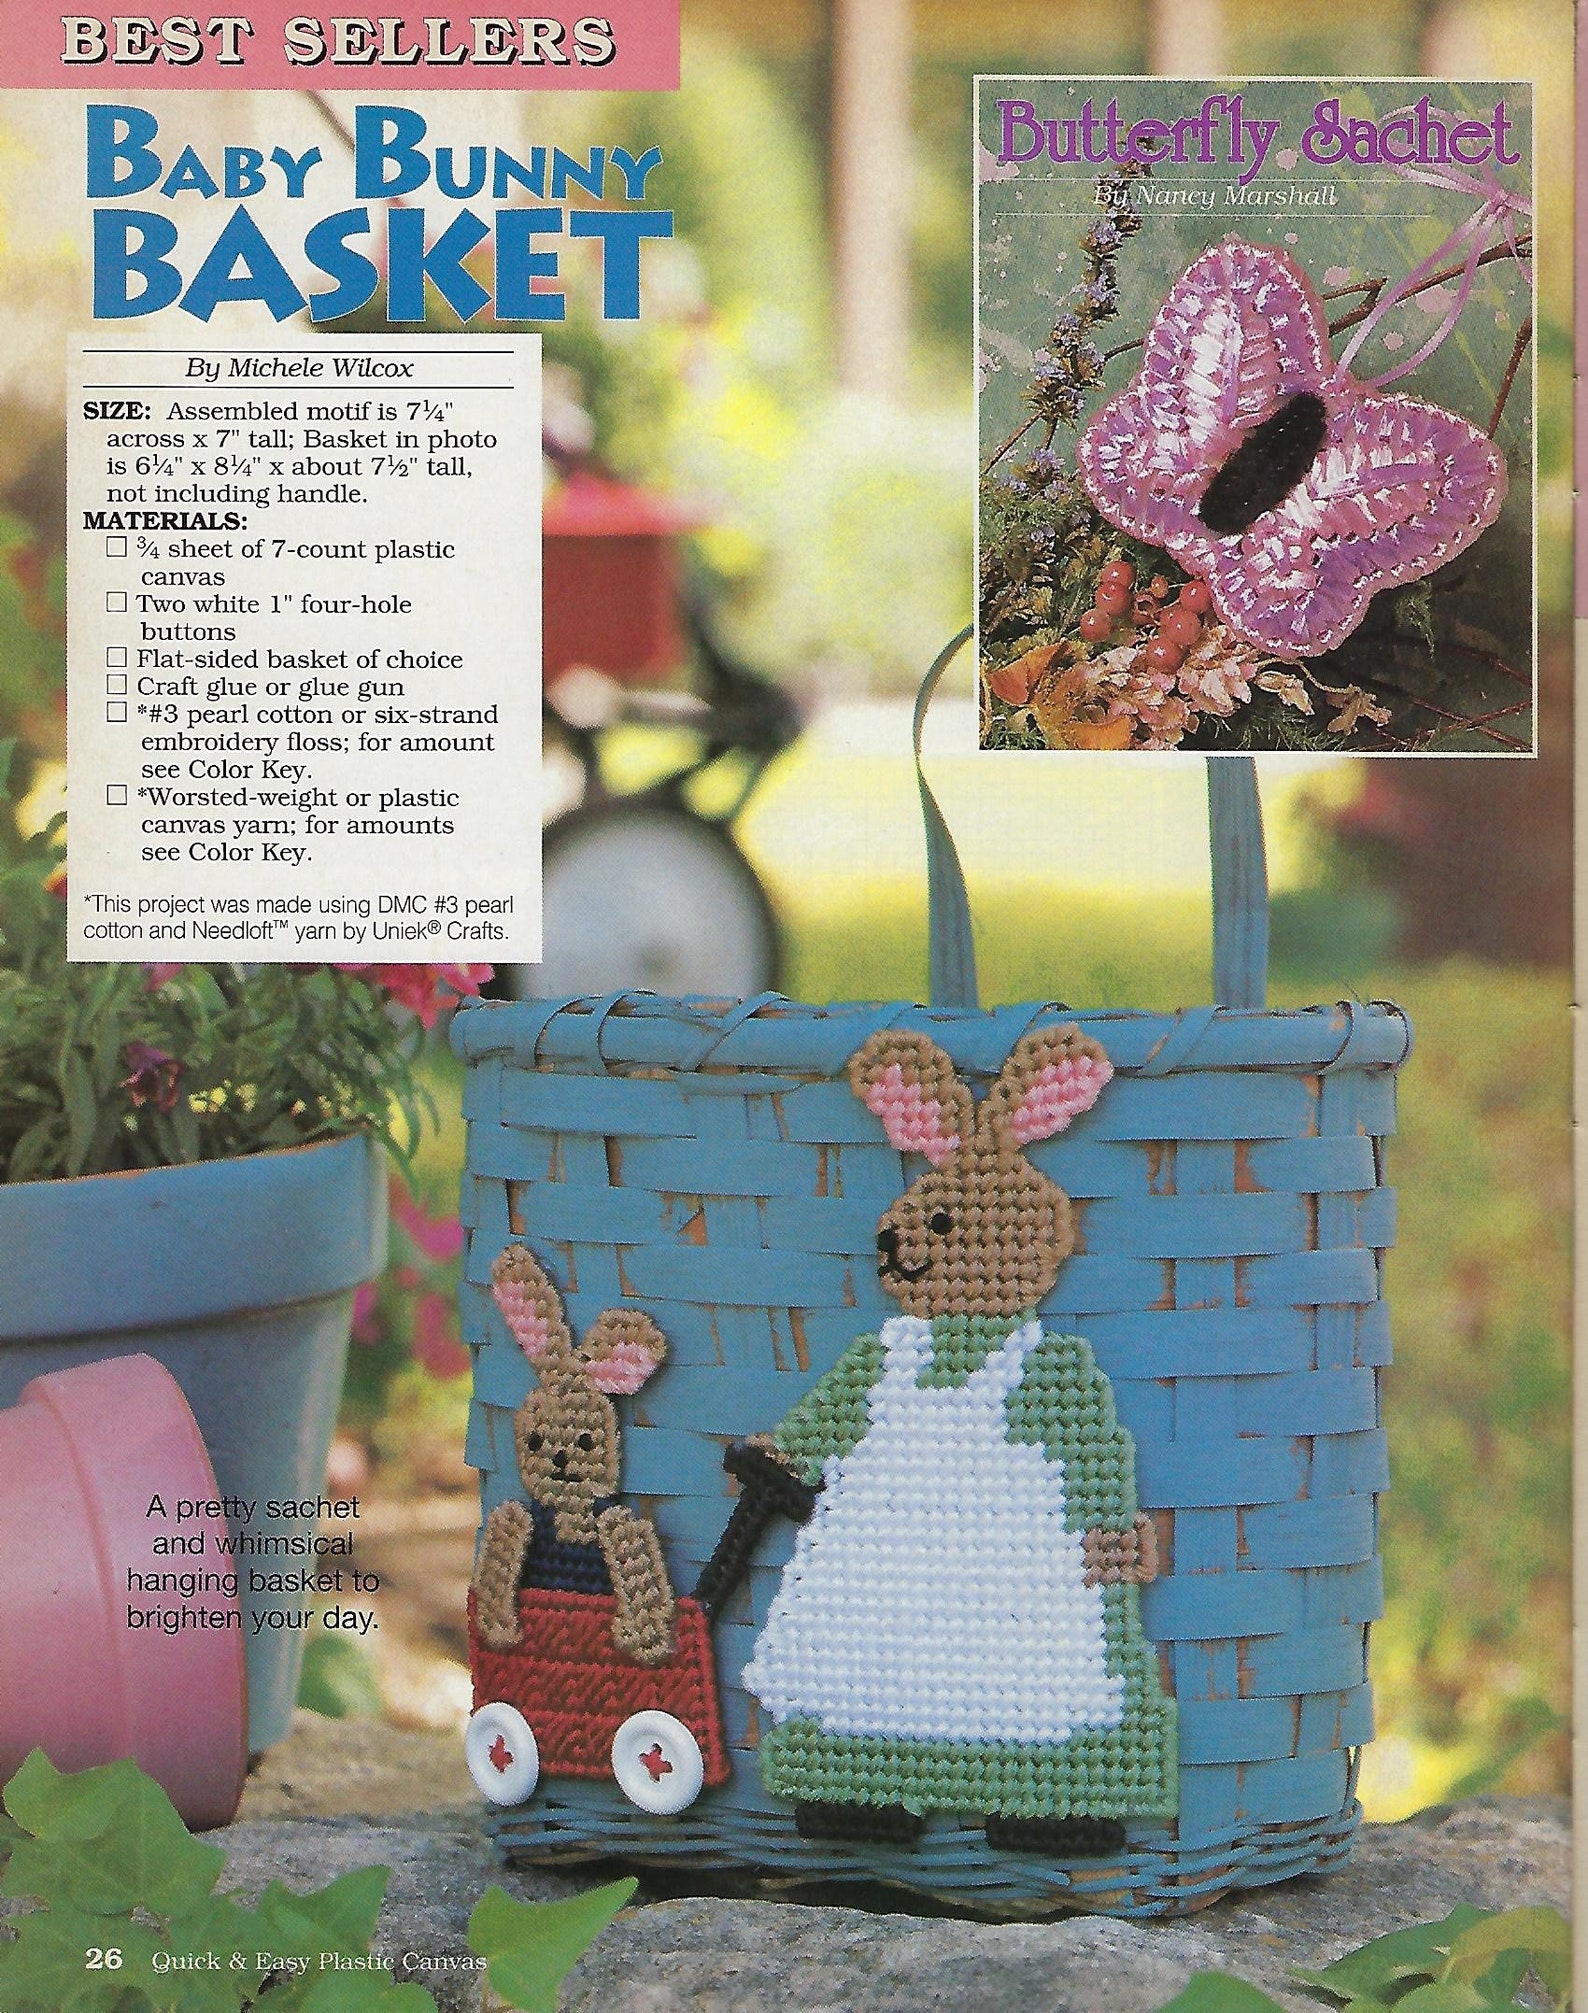 Quick & Easy Plastic Canvas Magazine February/march 1994 | Etsy